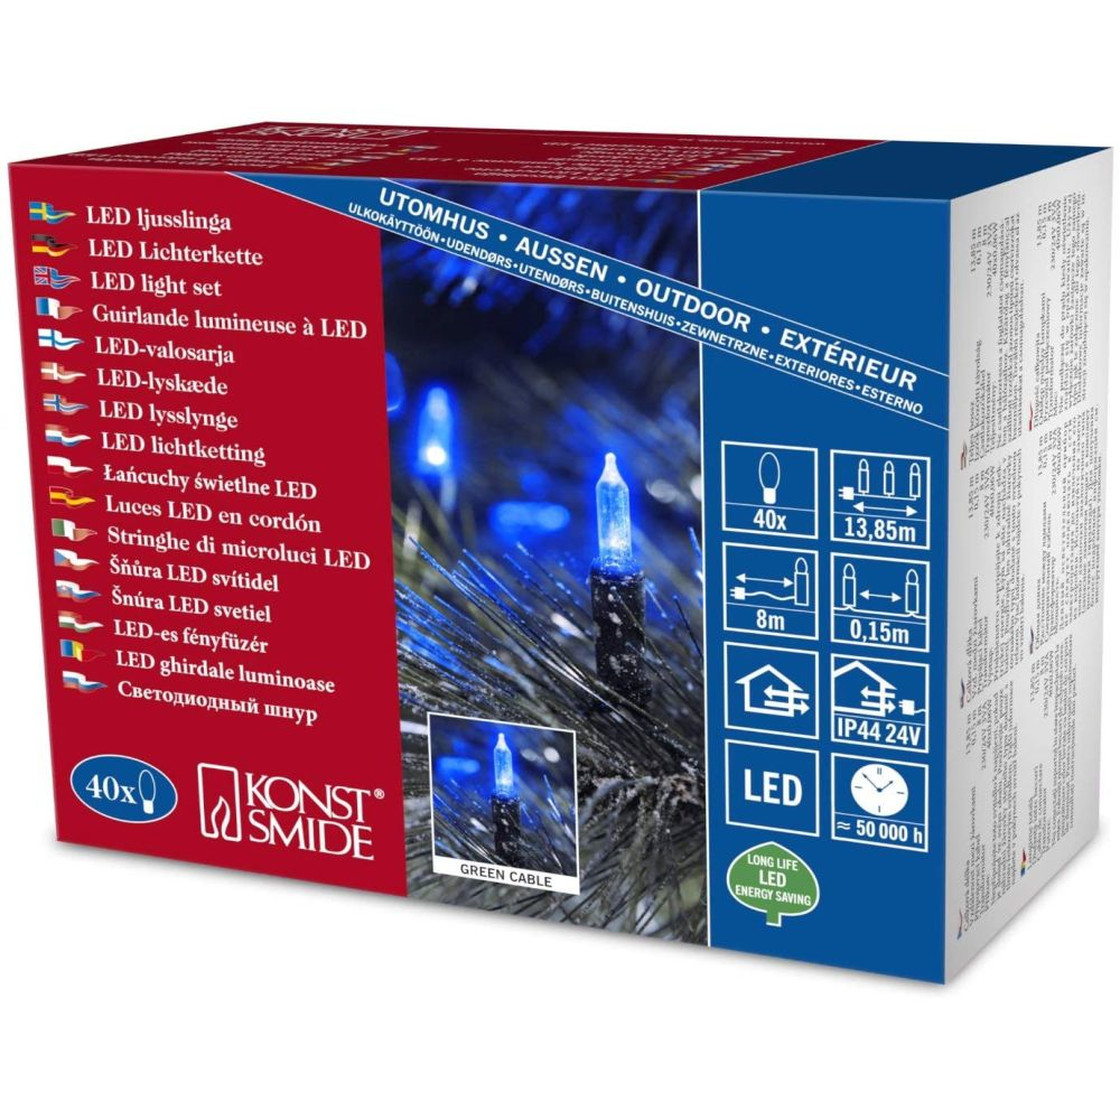 Konstsmide 6004-400 LED Ausse Blau mit 40 Minilichterkette 24V Dioden